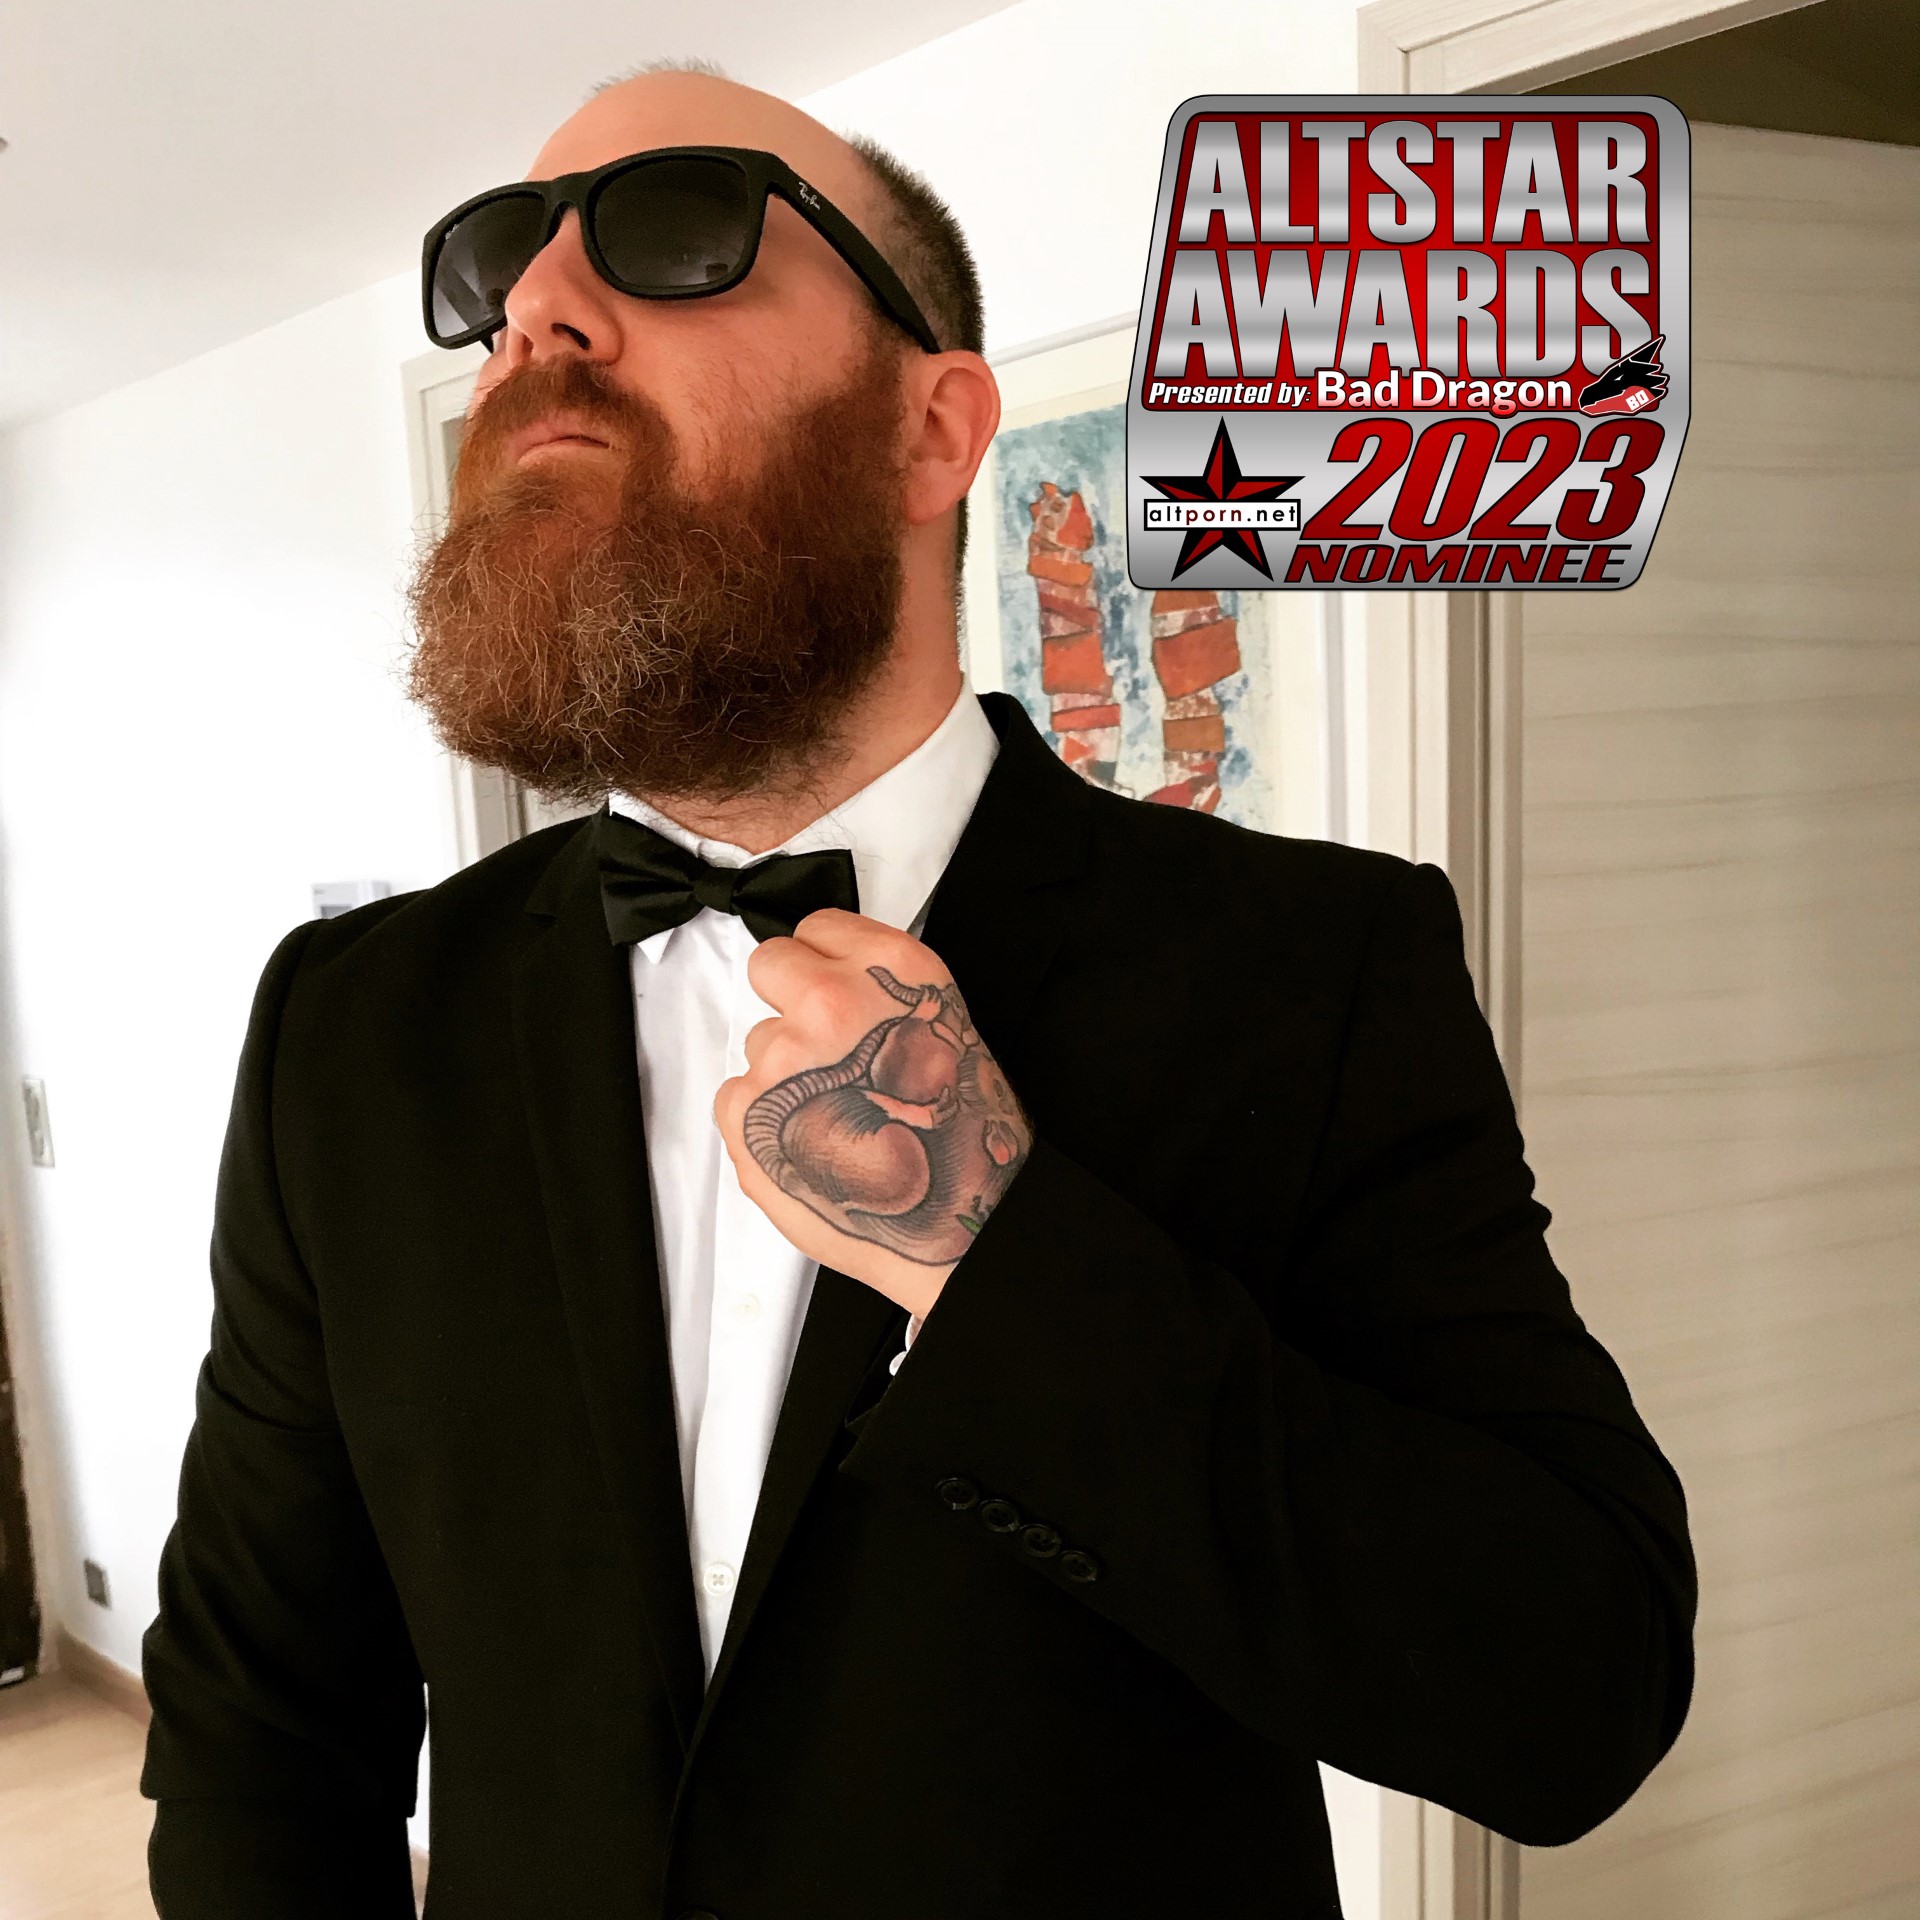 Will Ricky Greenwood Win Best AltStar Feature Video AGAIN?